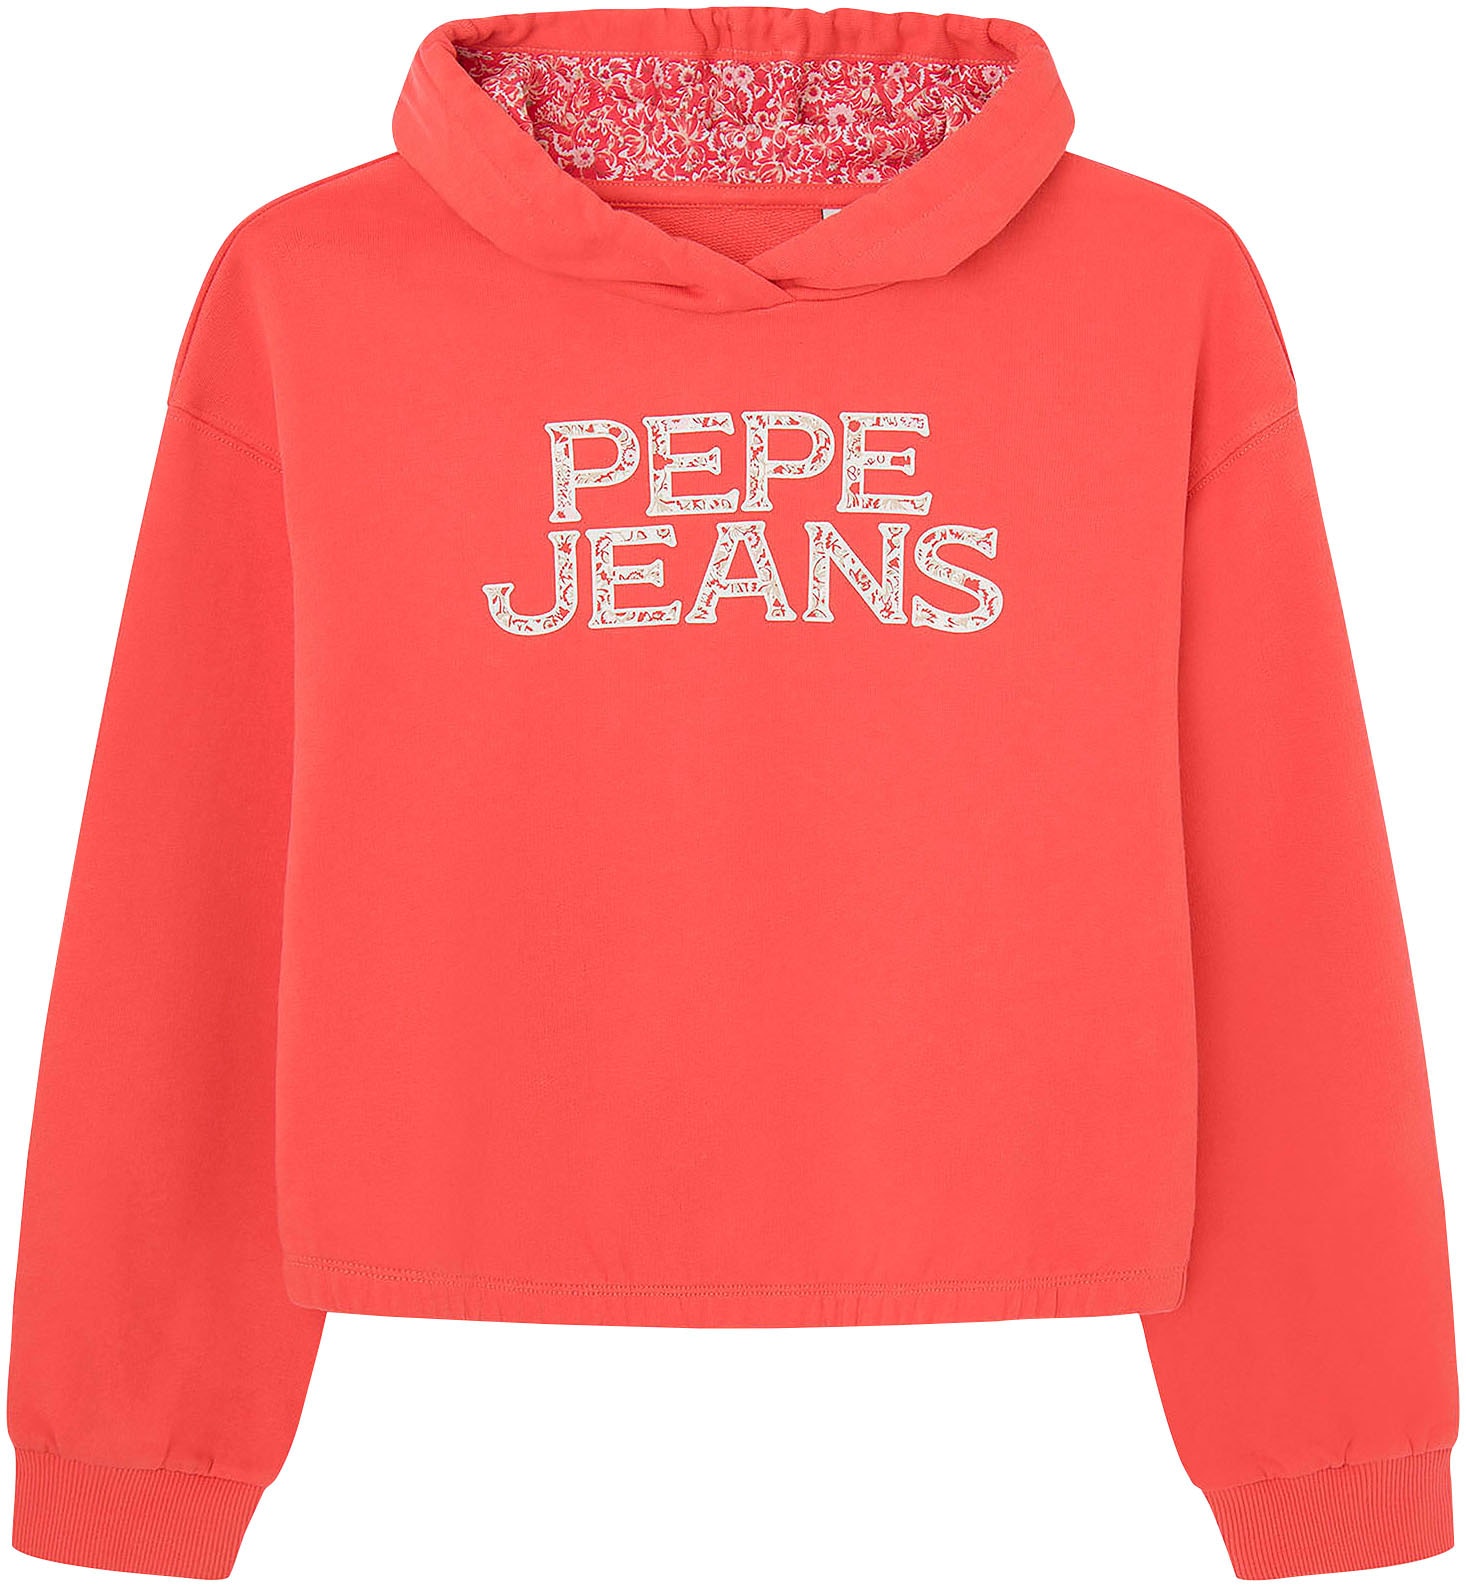 Pepe Jeans online OTTO bei entdecken